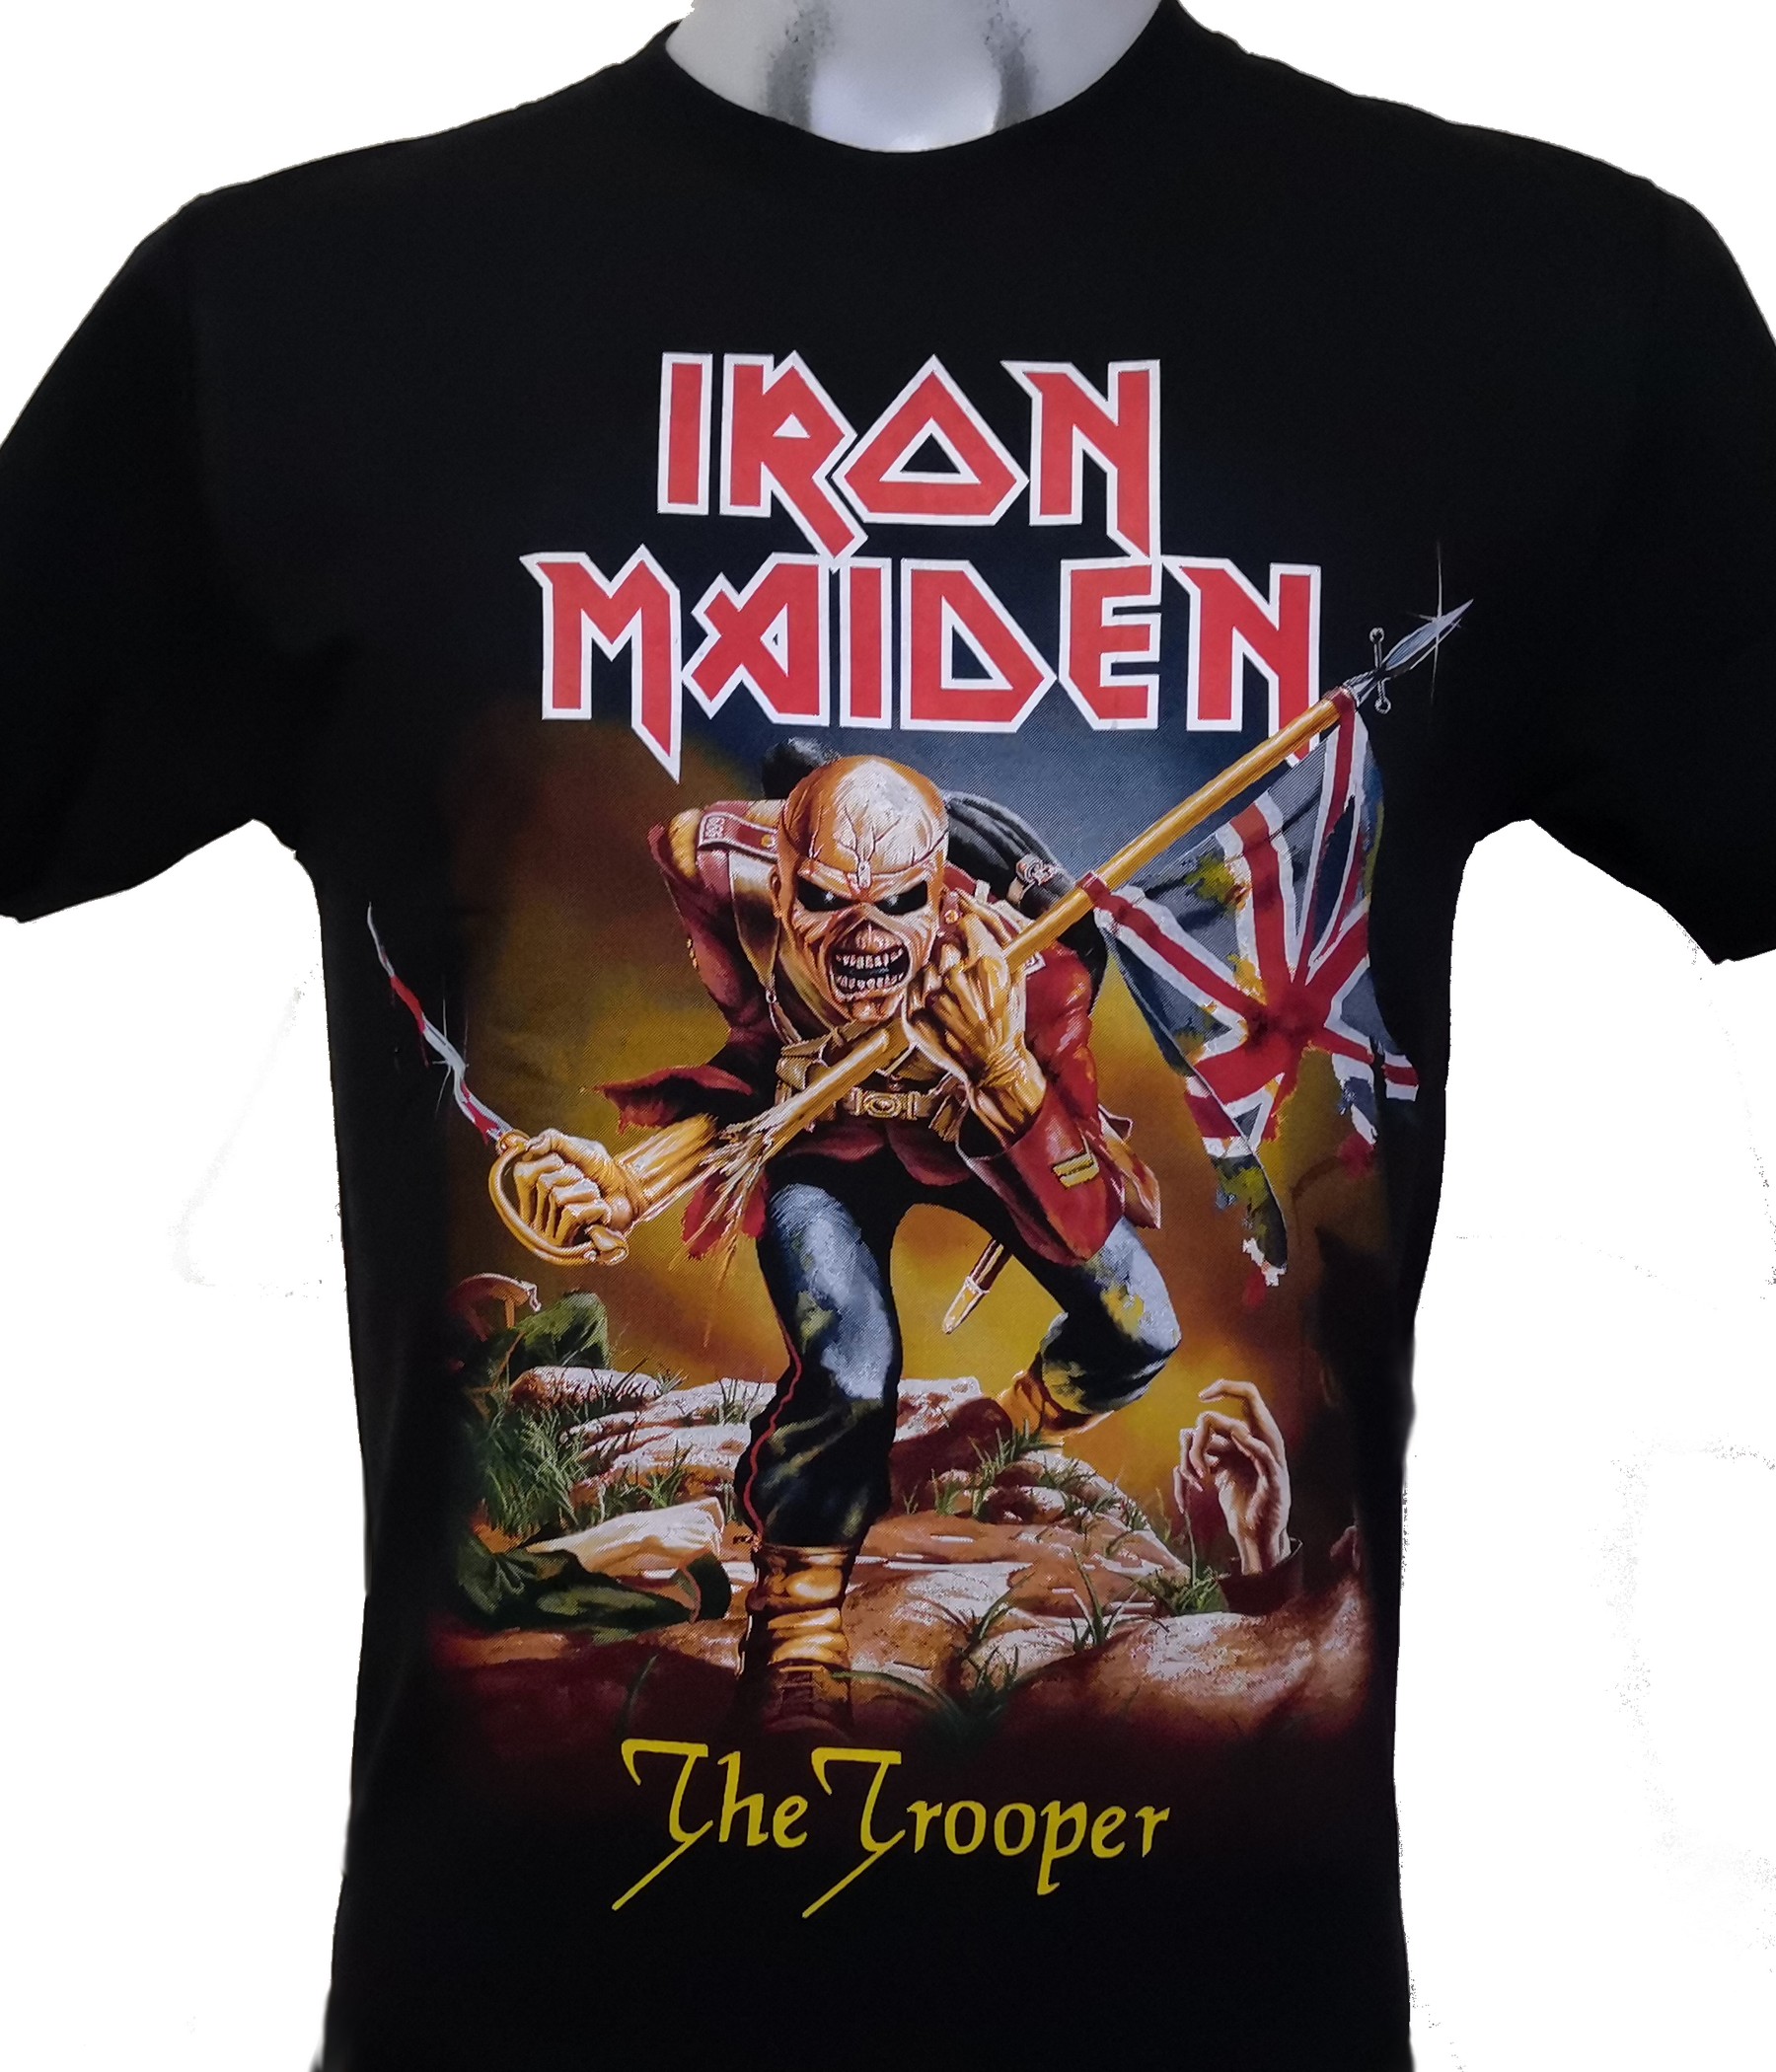 Skriv en rapport forfatter femte Iron Maiden t-shirt size 4-6 years The Trooper – RoxxBKK